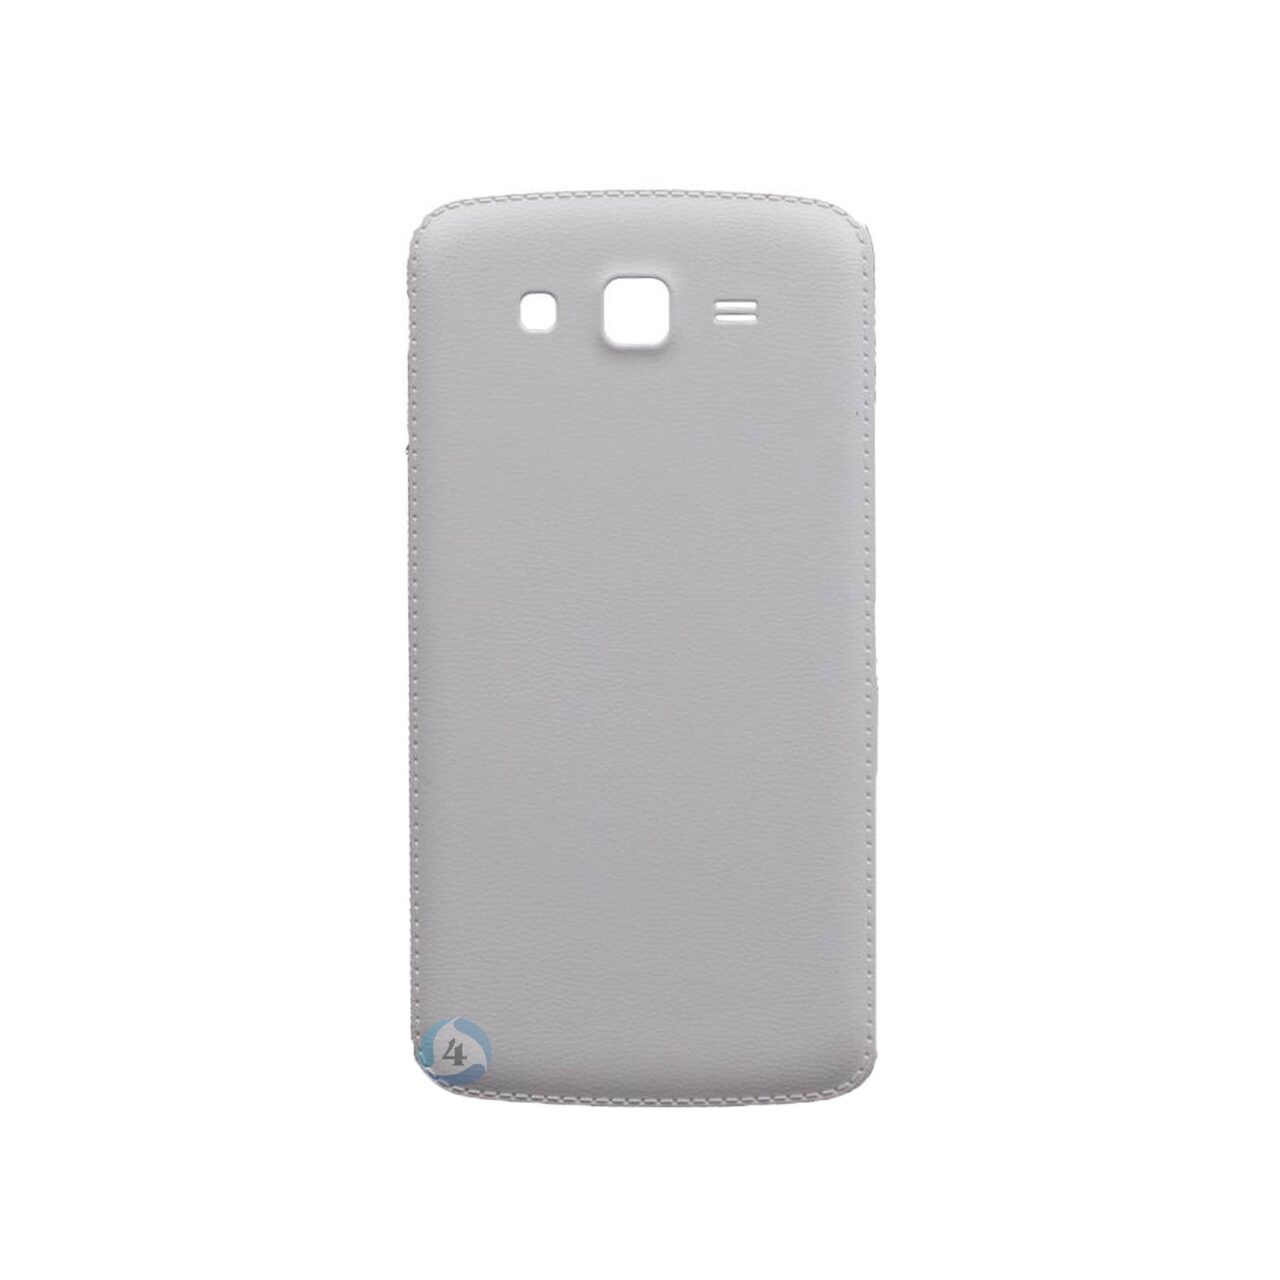 Samsung 7106 backcover white